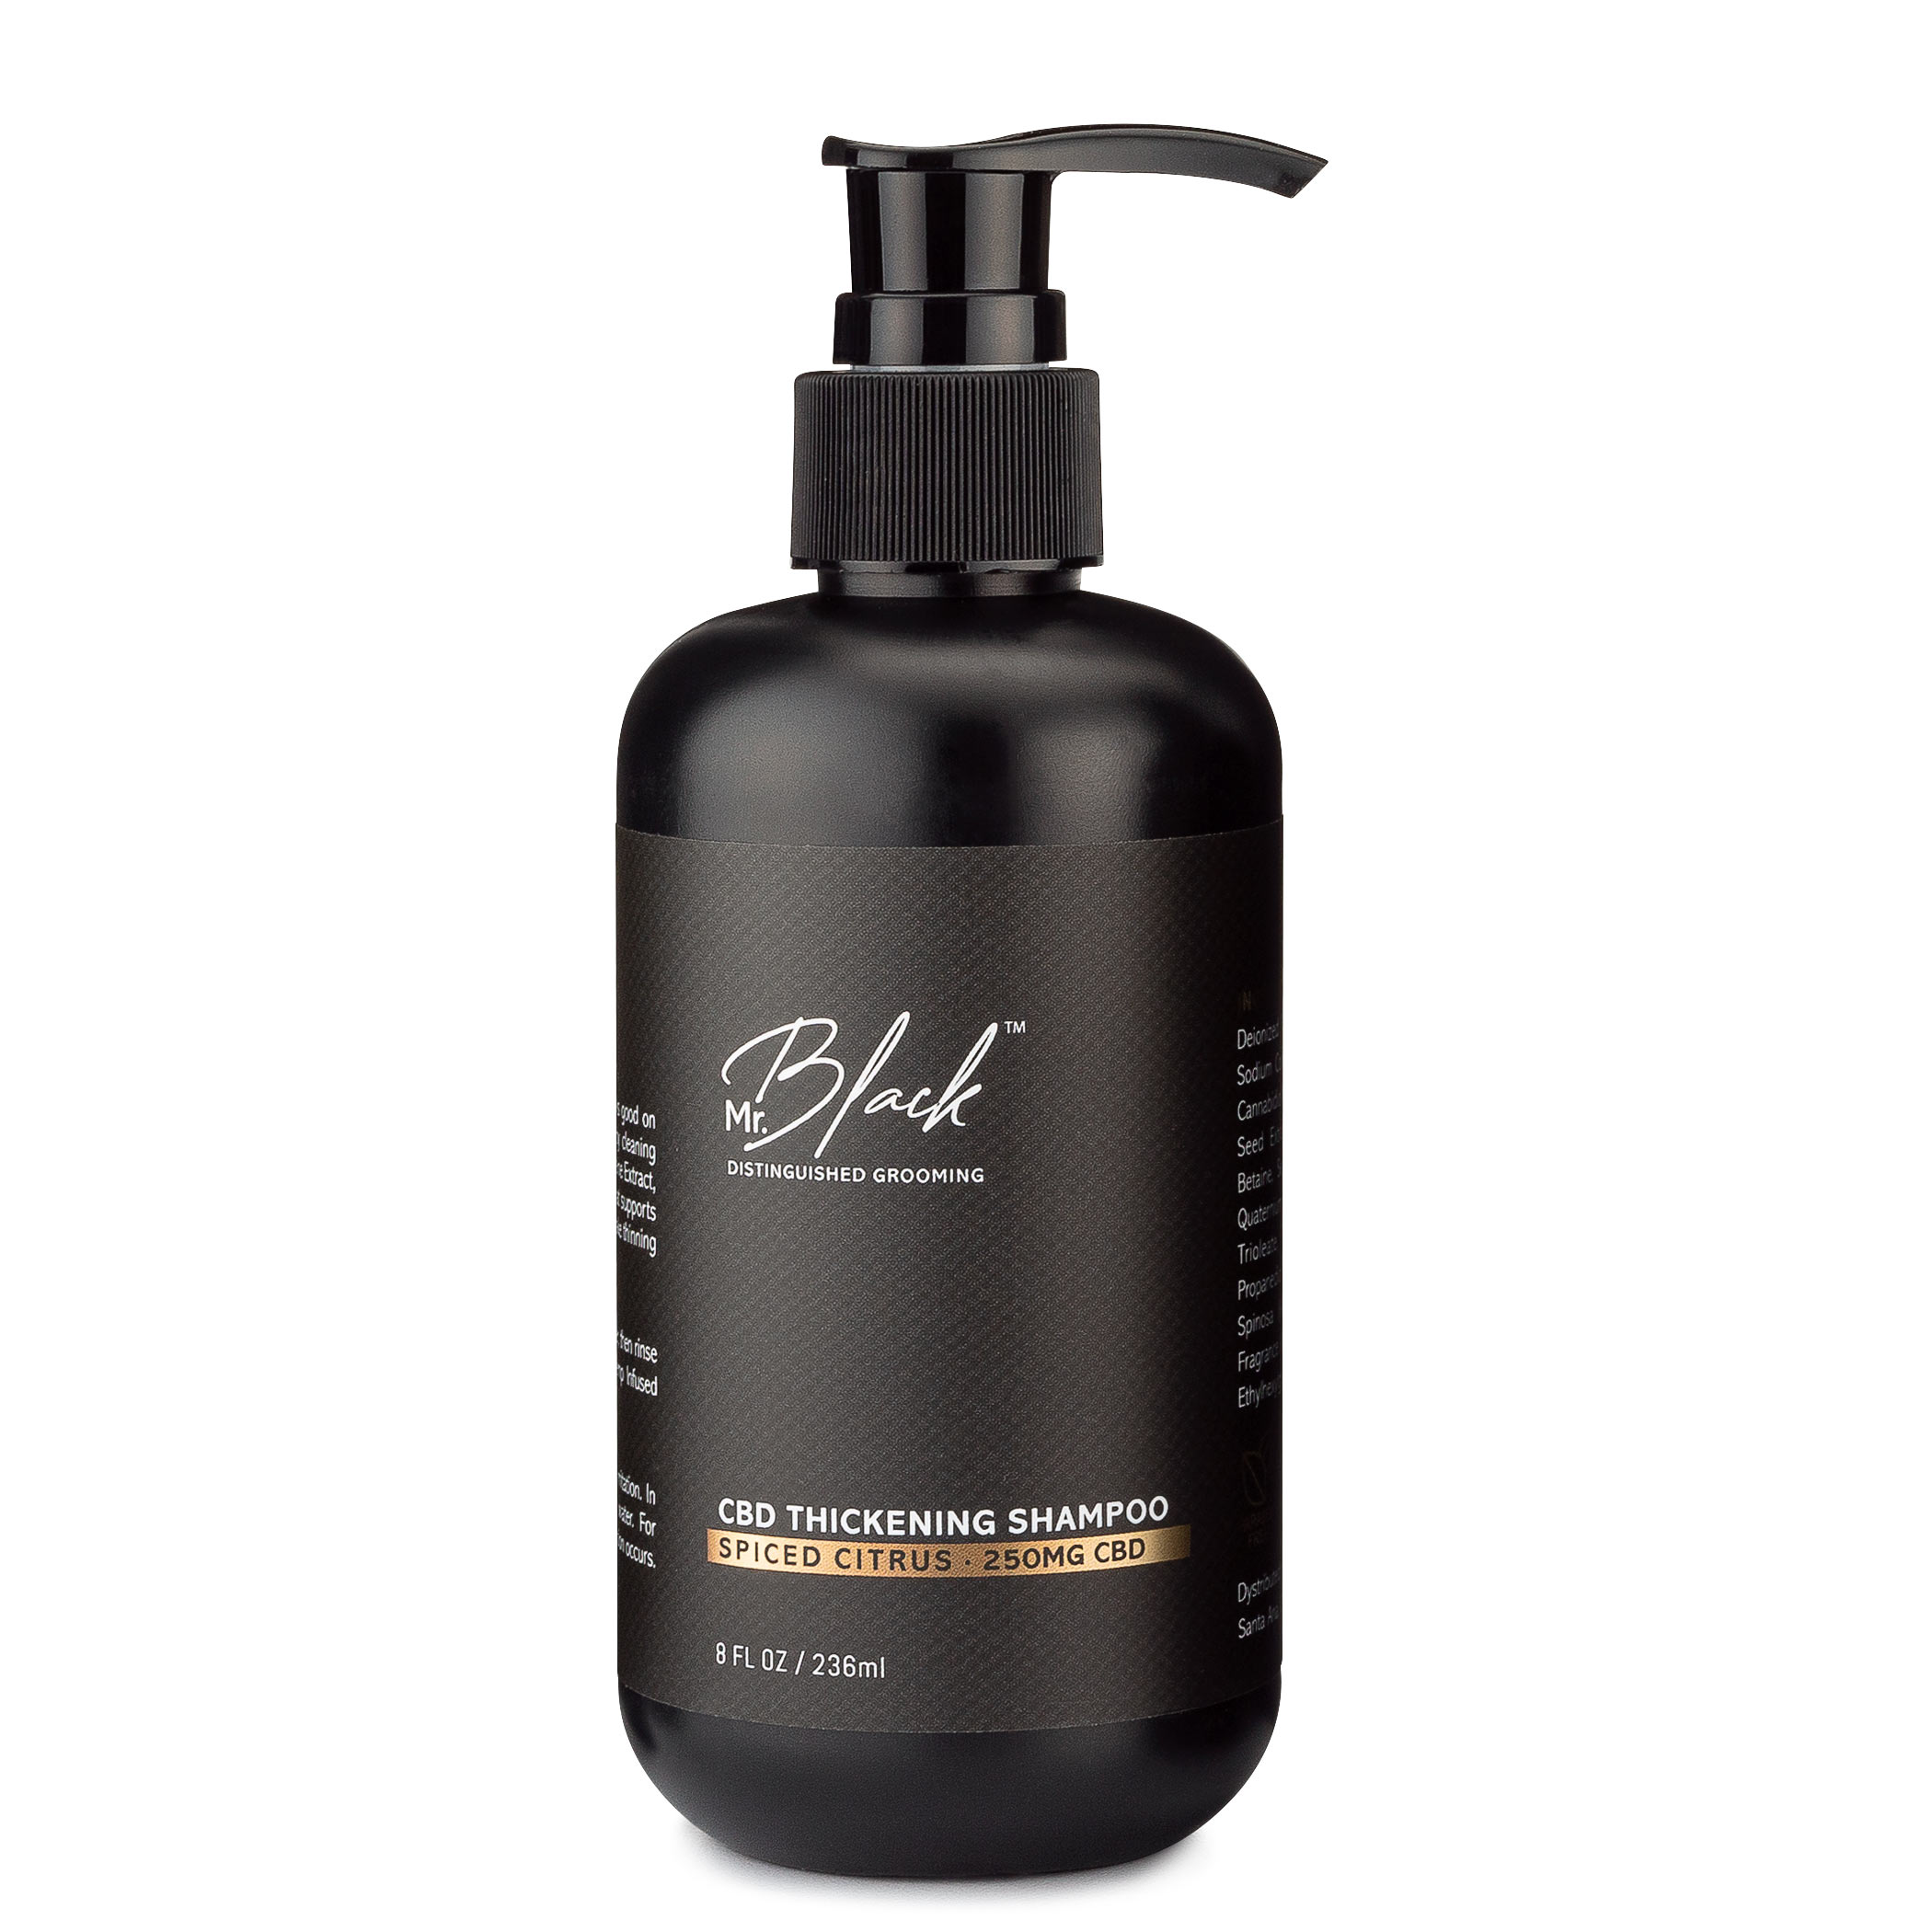 CBD Thickening Shampoo - Spiced Citrus Mr. Black Image